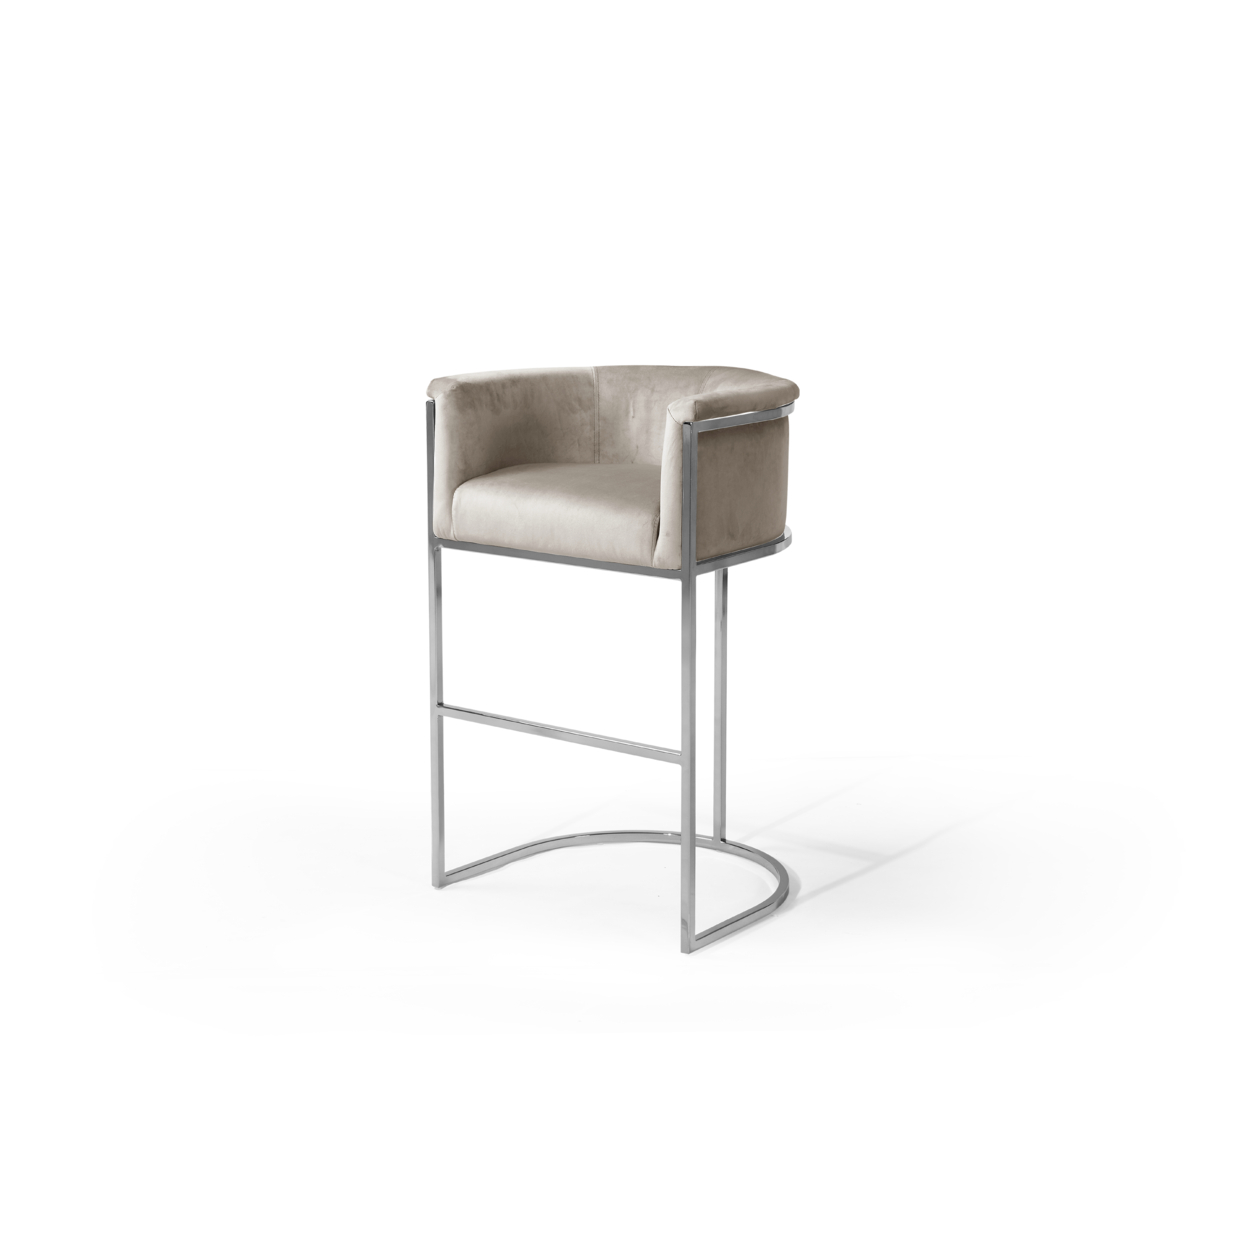 Iconic Home Scout Bar Stool Chair Velvet Upholstered Rolled Shelter Arm Design Half-Moon Chrometone Solid Metal U-Shaped Base - Teal